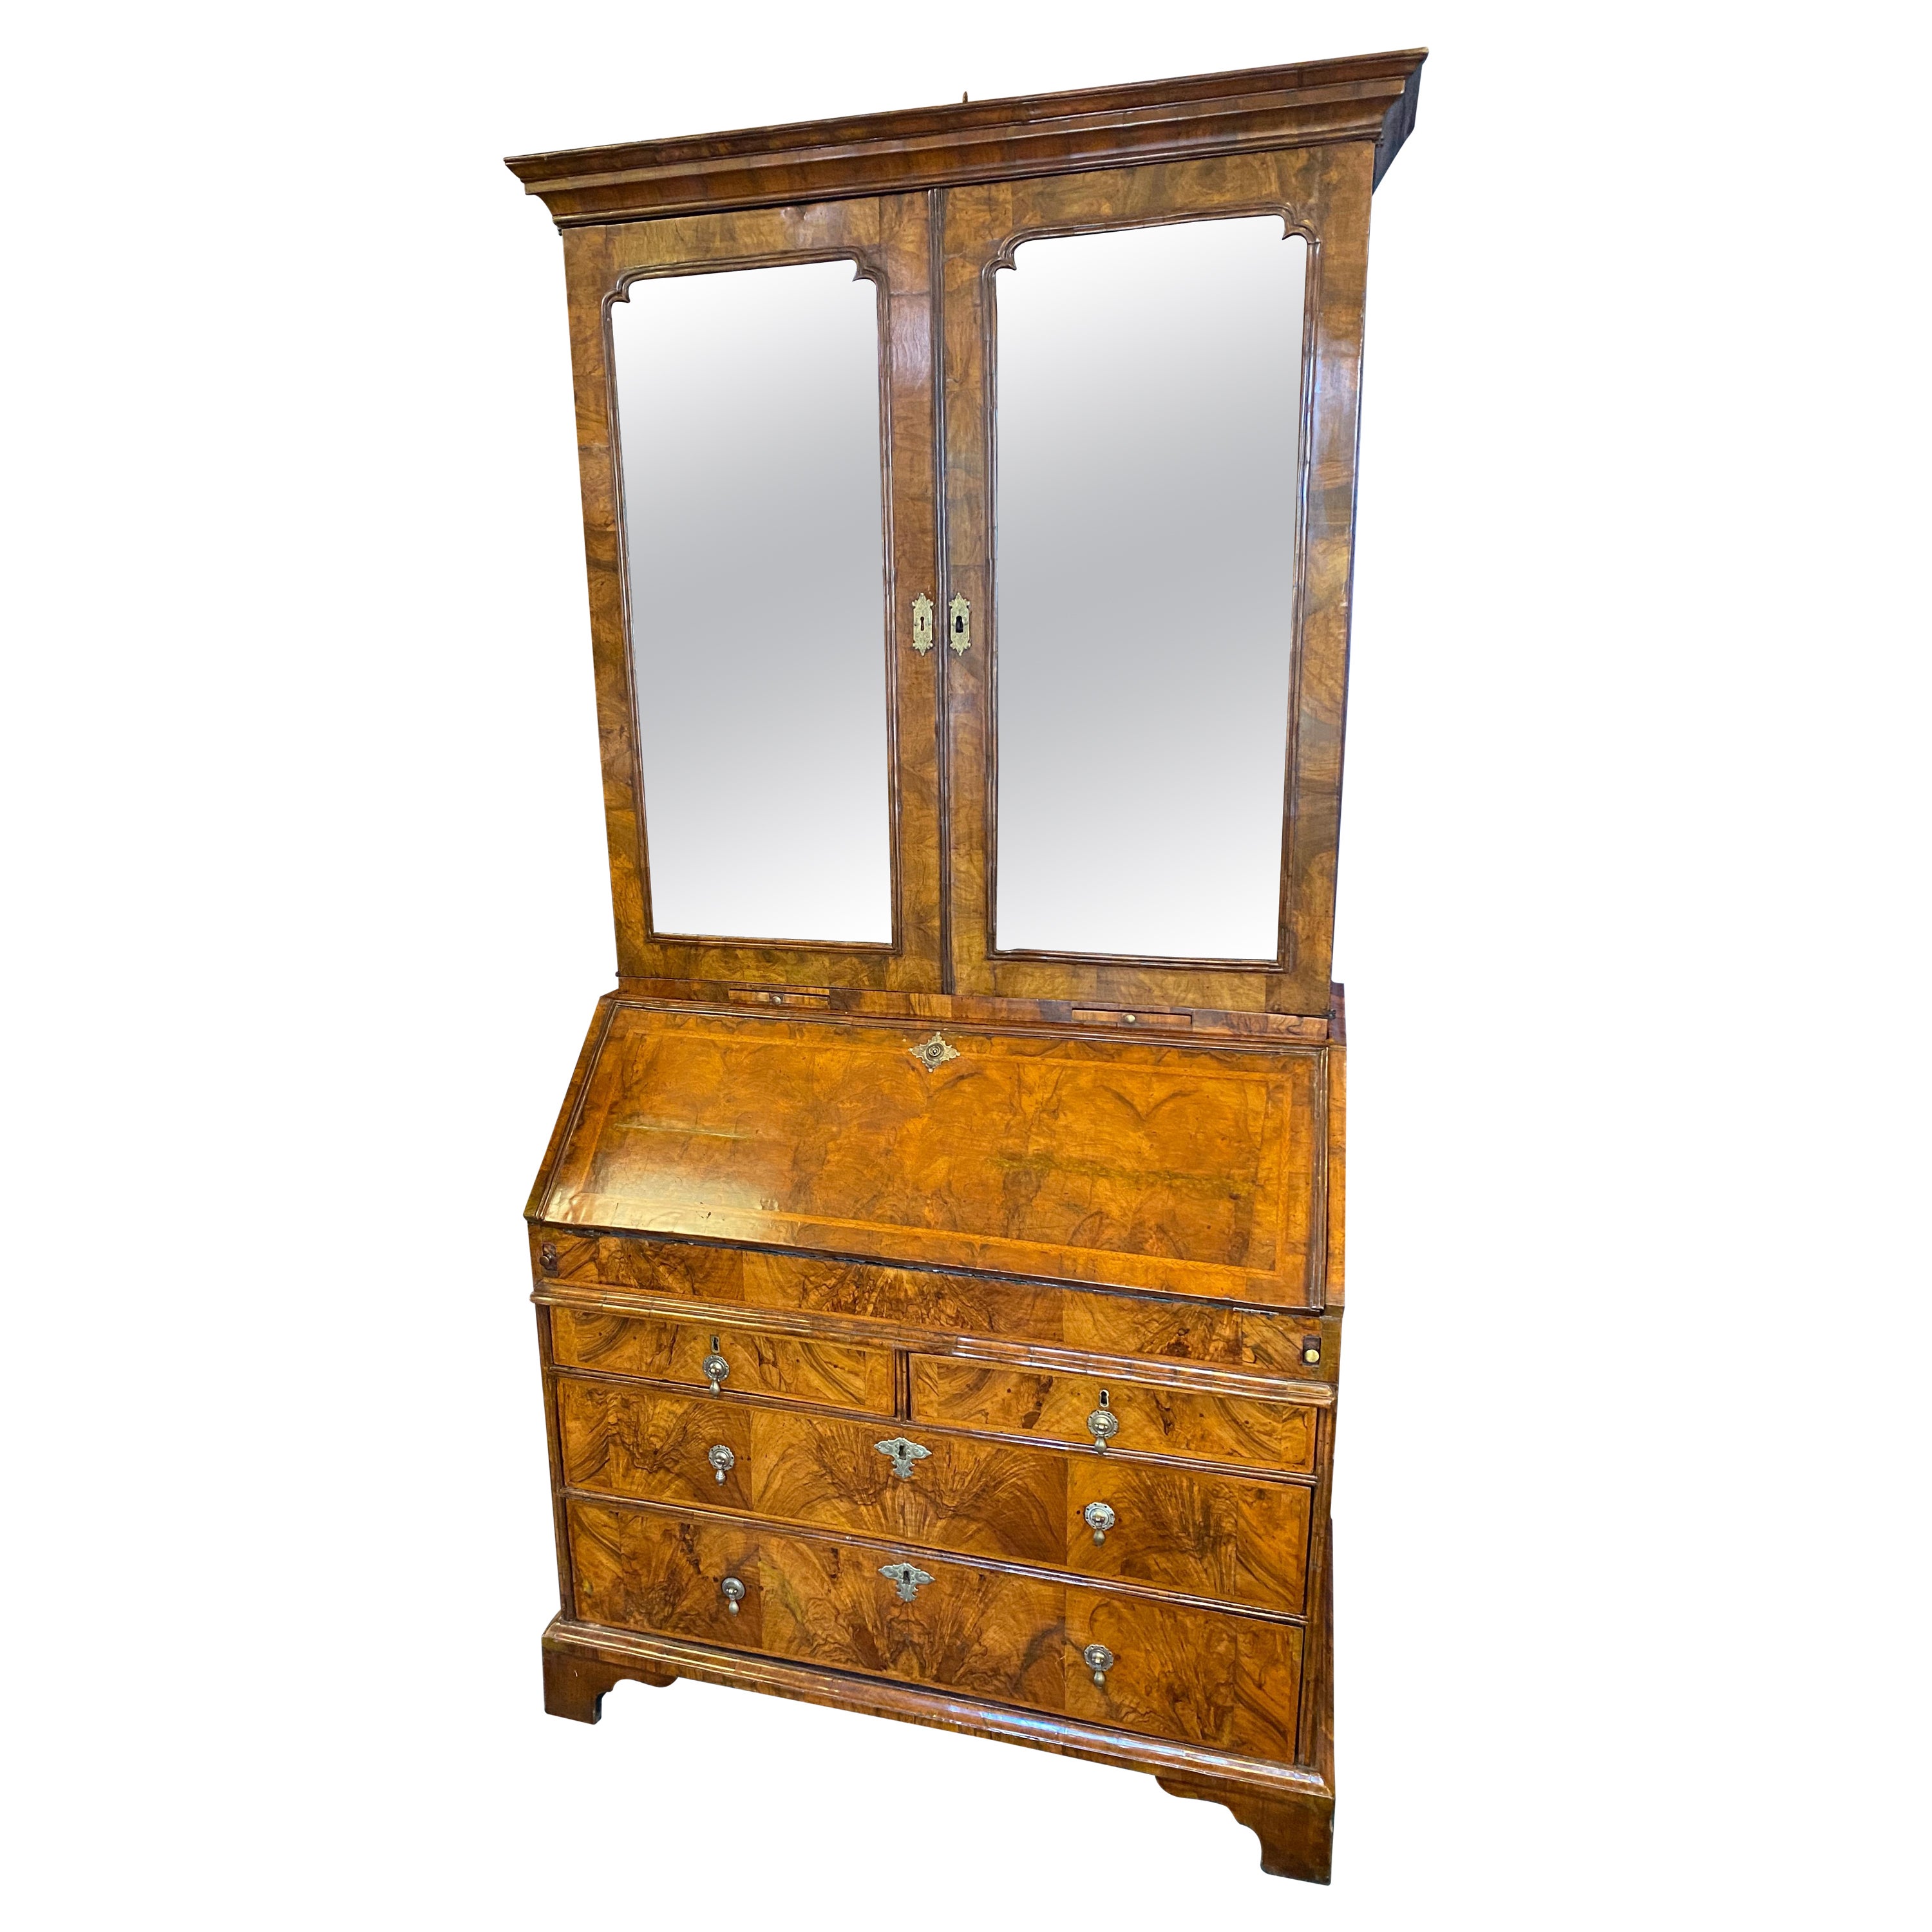 Early 18th Century Queen Anne Period Walnut Bureau Bookcase